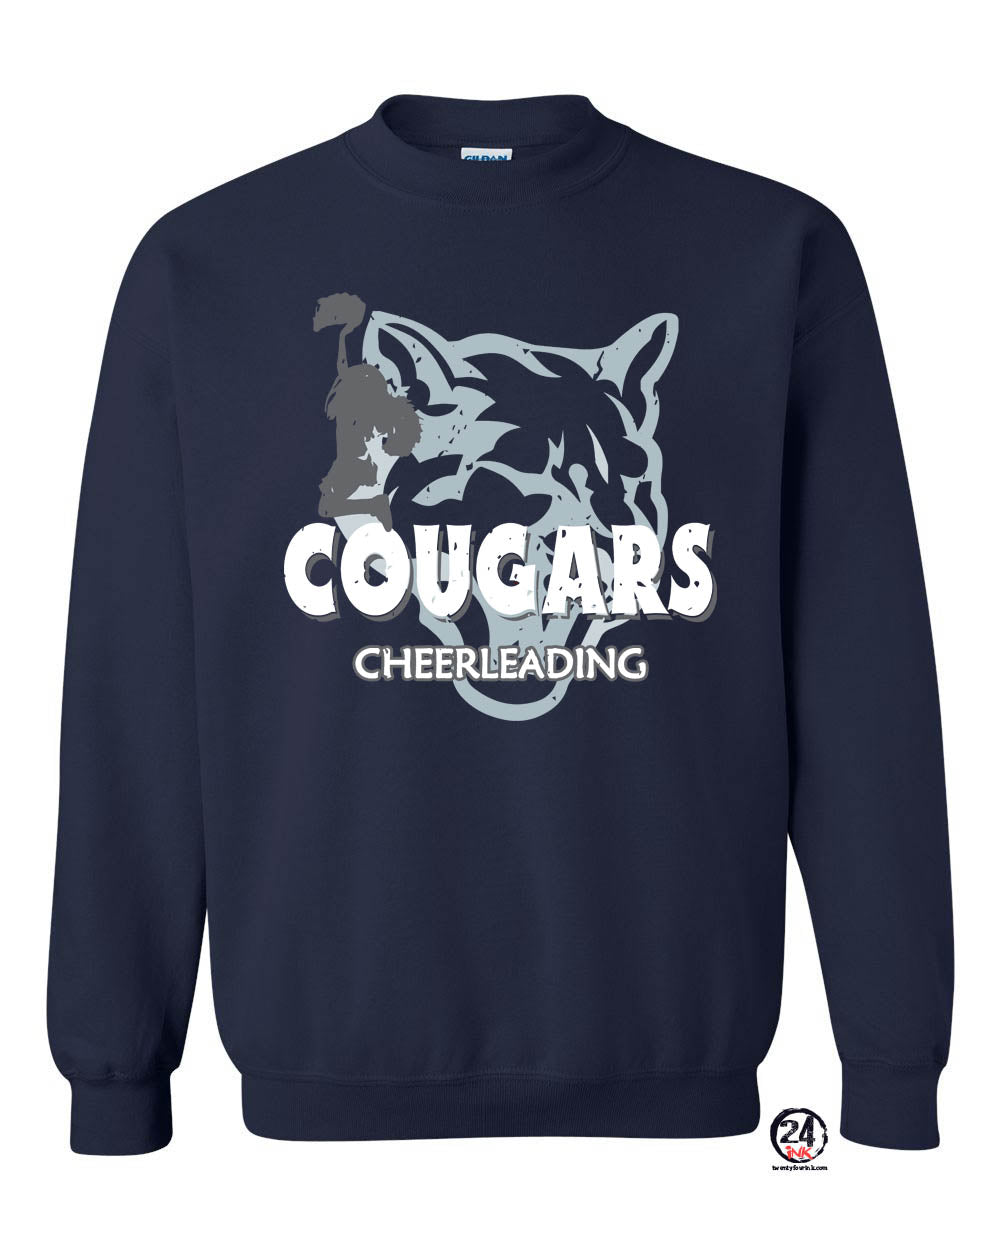 Cougars Cheerleading non hooded sweatshirt